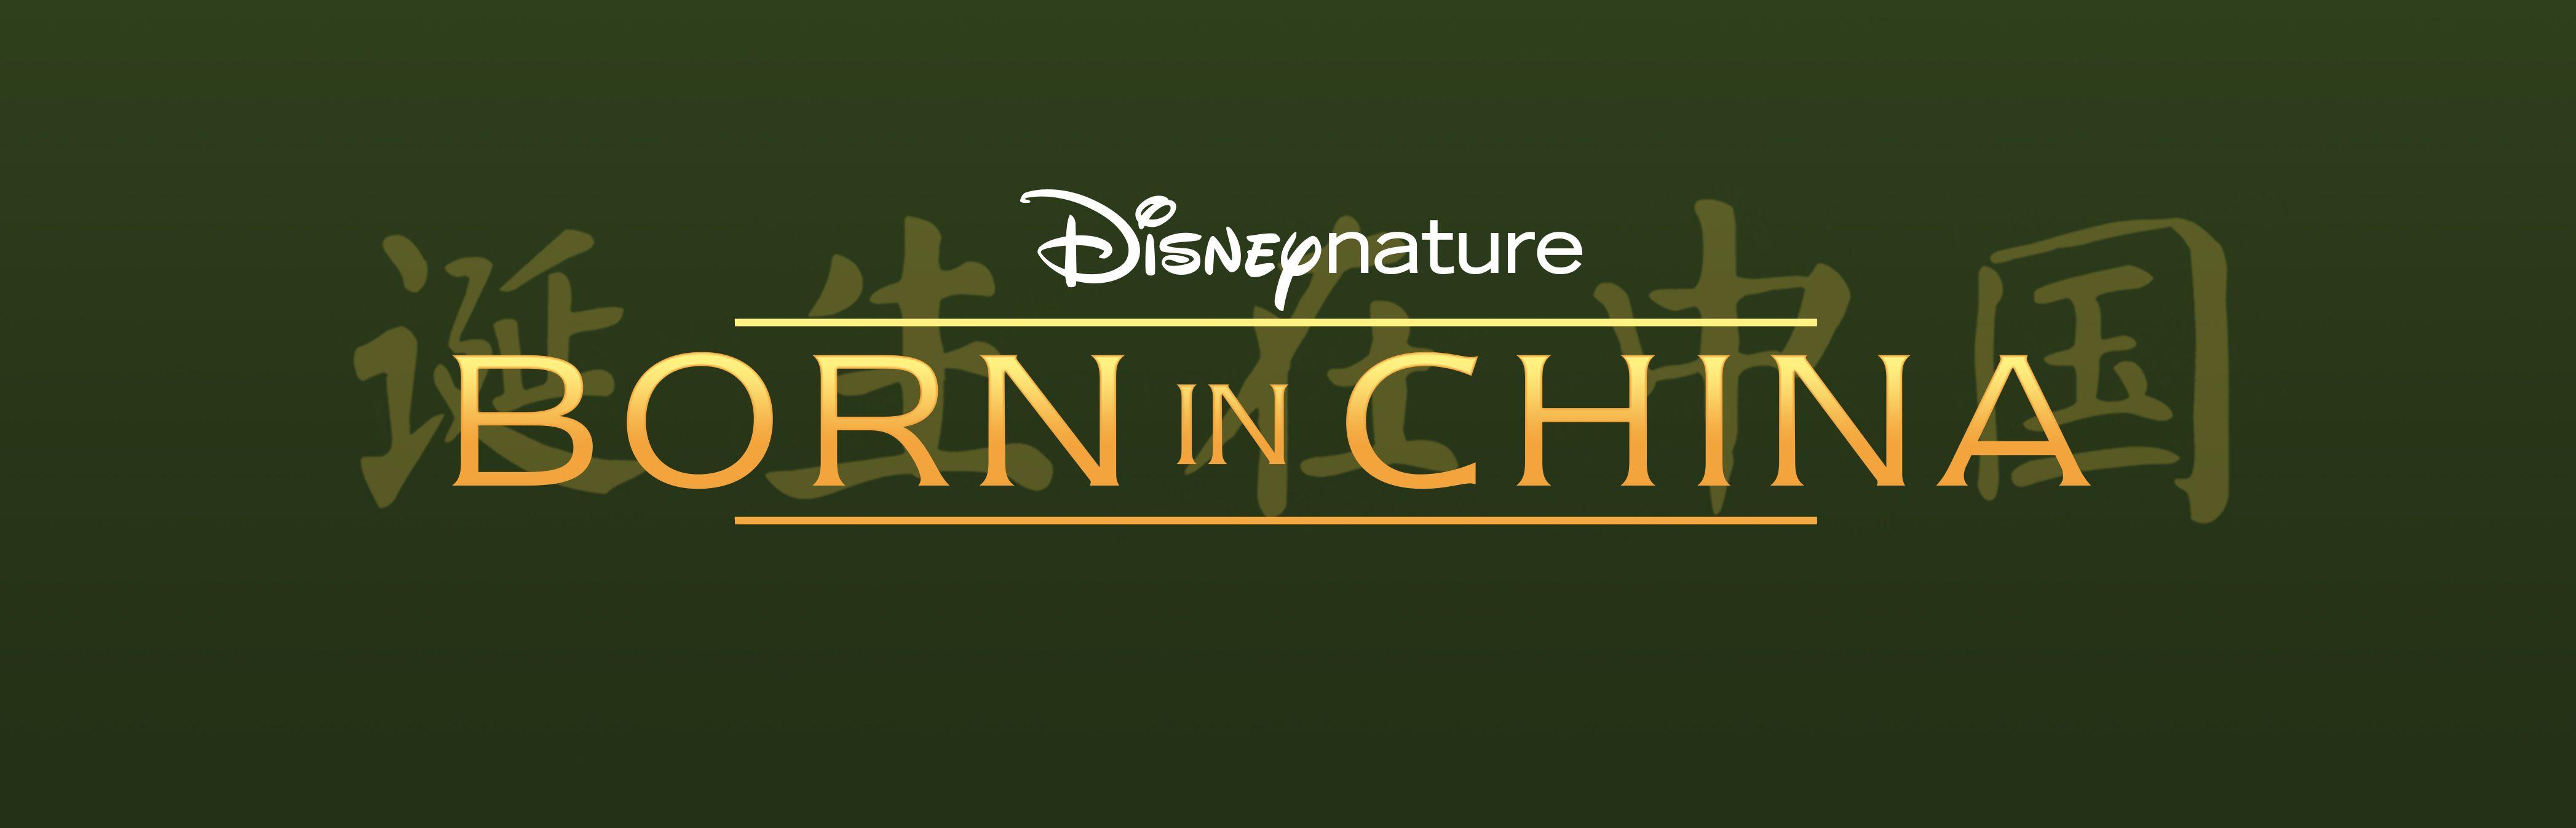 Disney Movie 2017 Logo - New Clips of DisneyNature BORN IN CHINA #BornInChina -